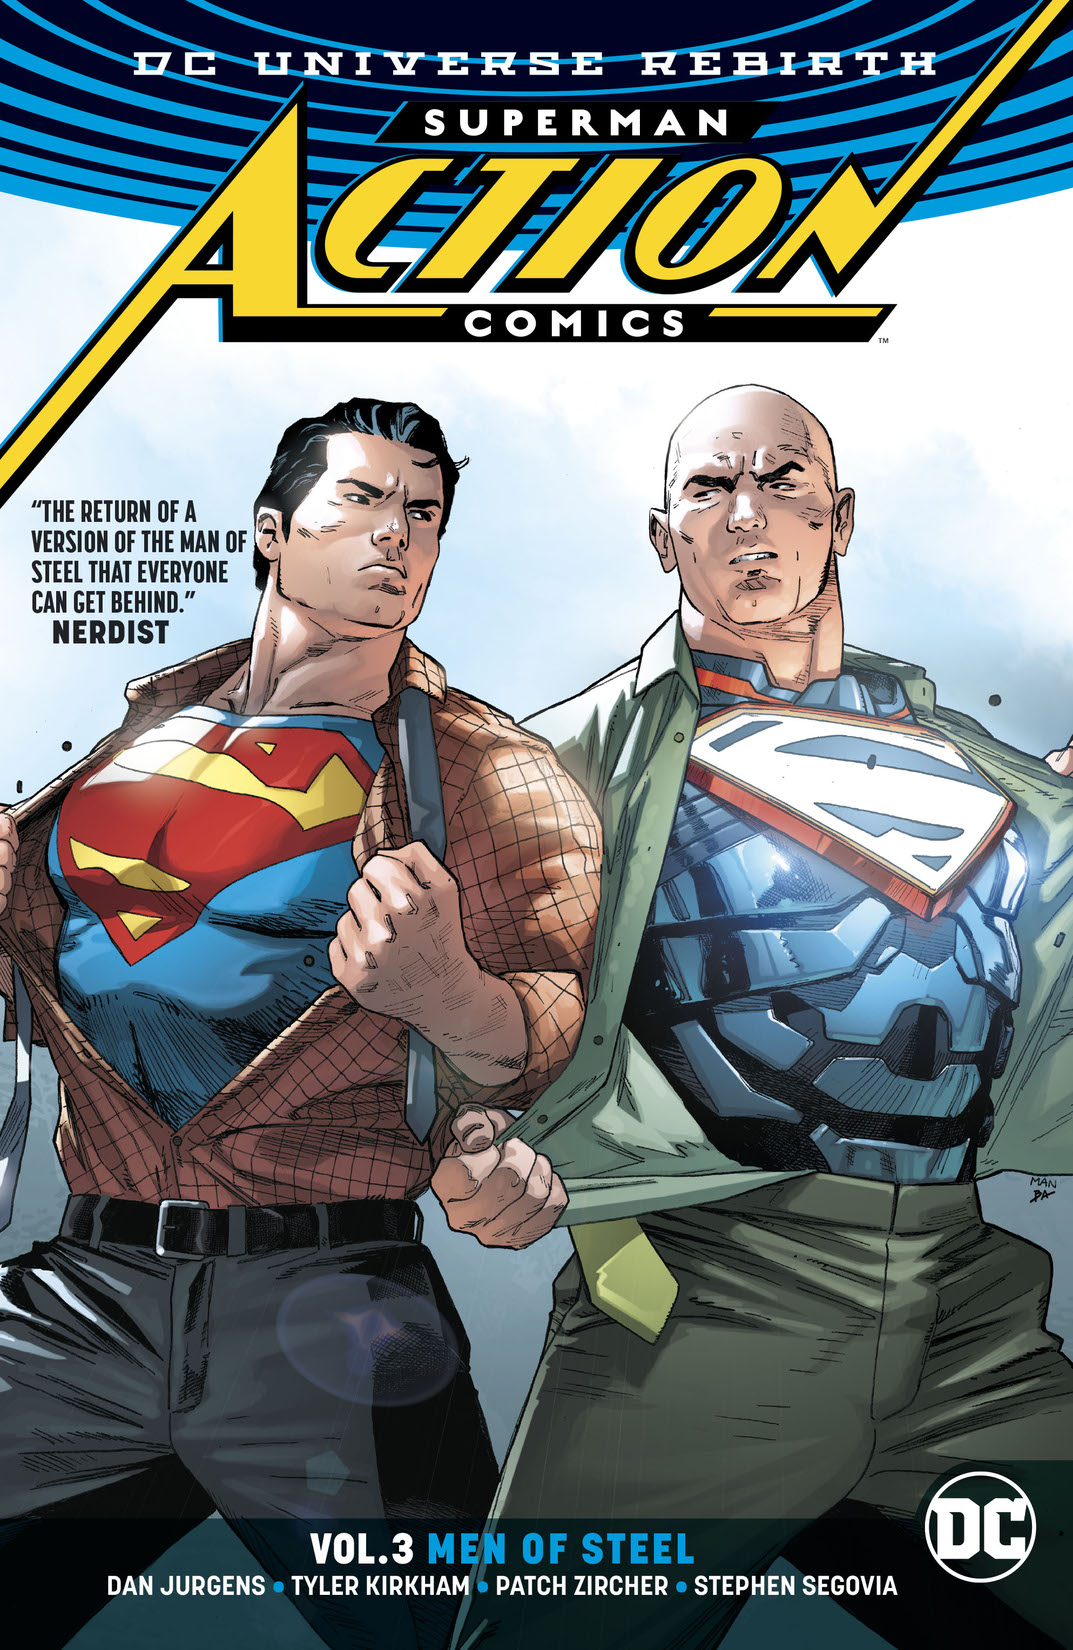 Superman - Action Comics Vol. 3: Men of Steel preview images